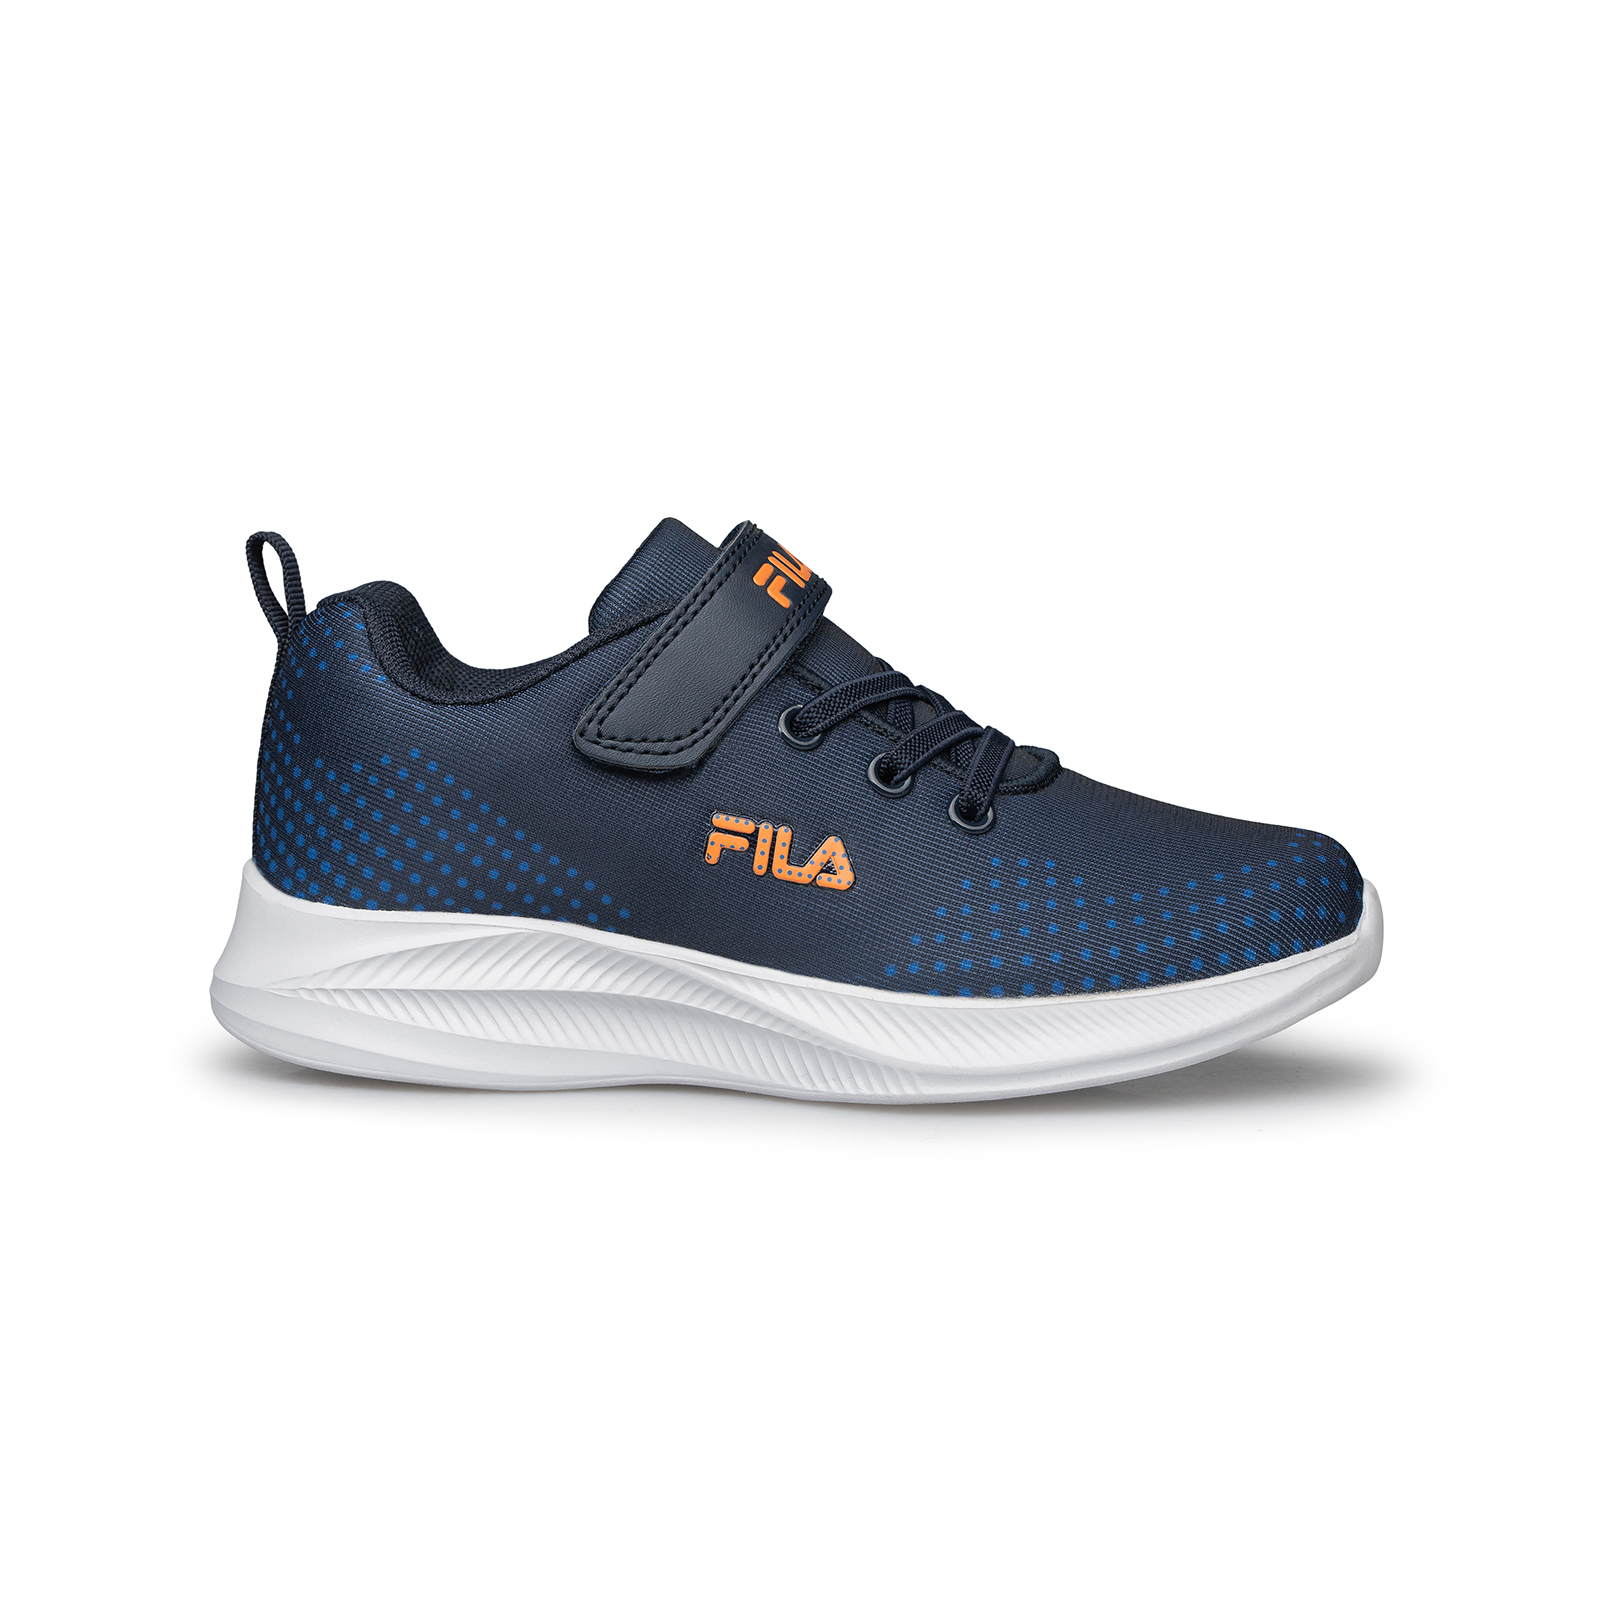 Fila - 1308977 BRETT 3 FOOTWEAR - DARK BLUE Παιδικά > Παπούτσια > Αθλητικά > Παπούτσι Low Cut